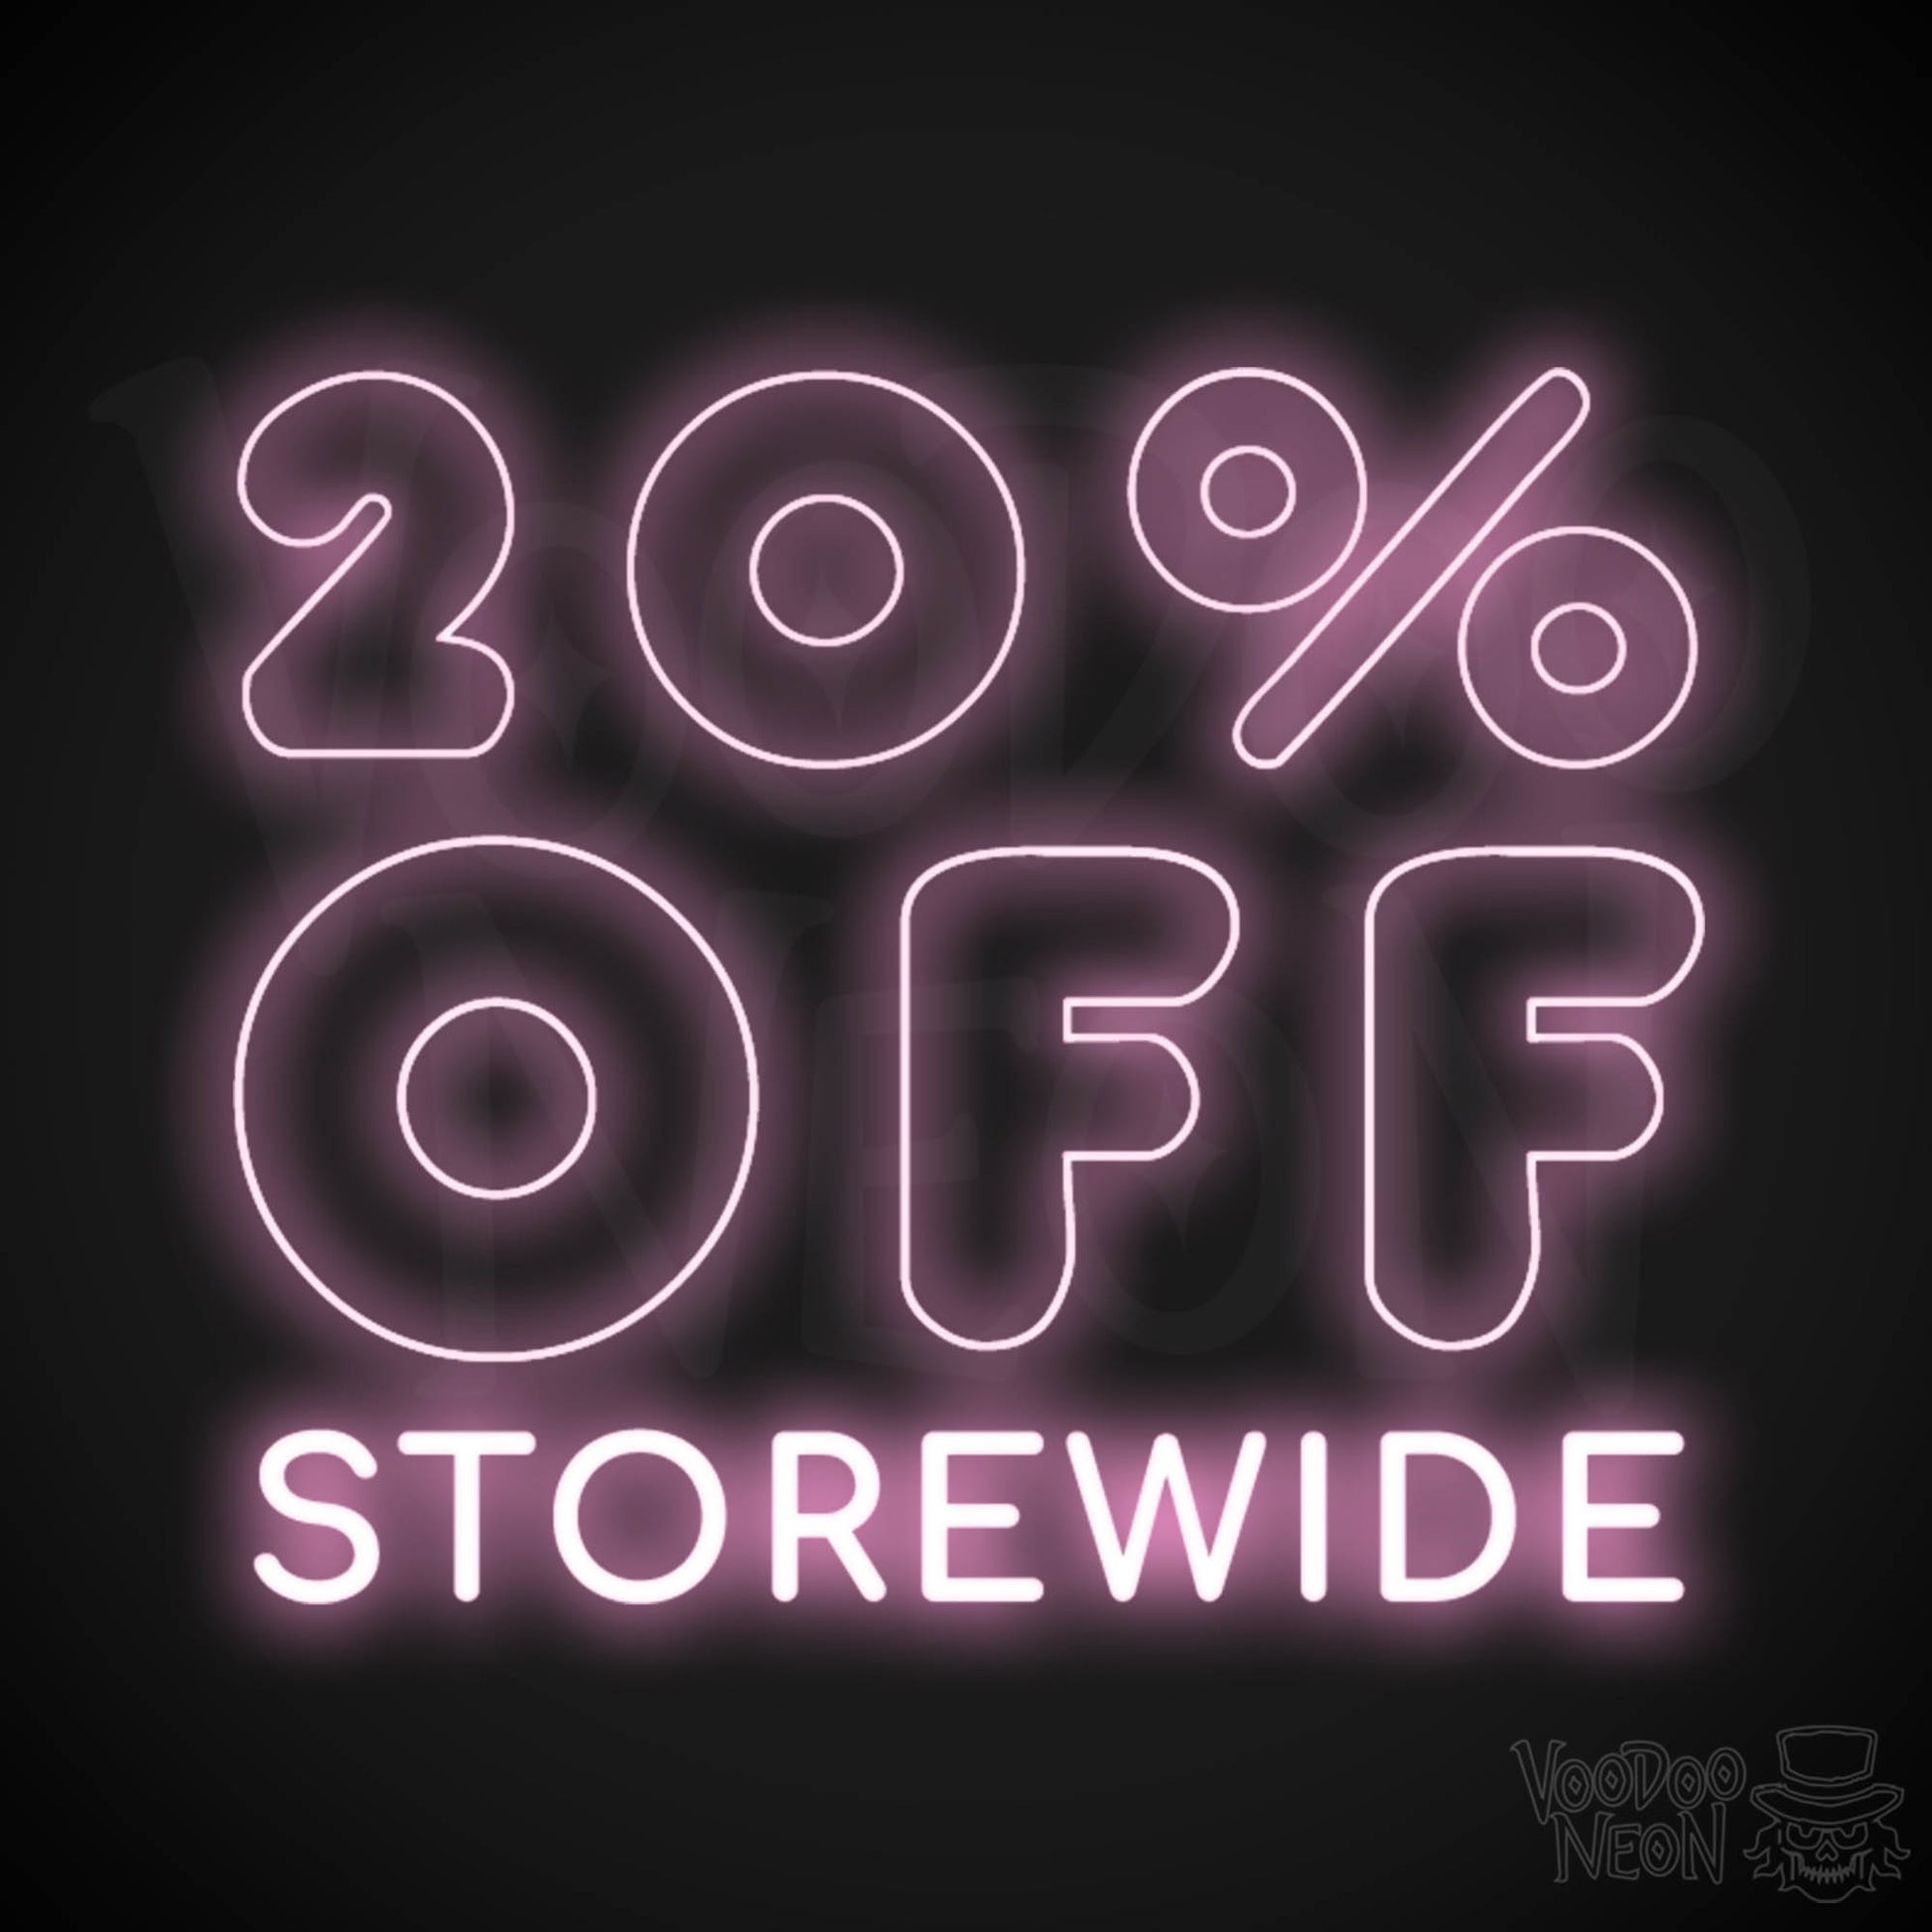 20% Off Storewide Neon Sign - 20% Off Storewide Sign - LED Shop Sign - Color Light Pink